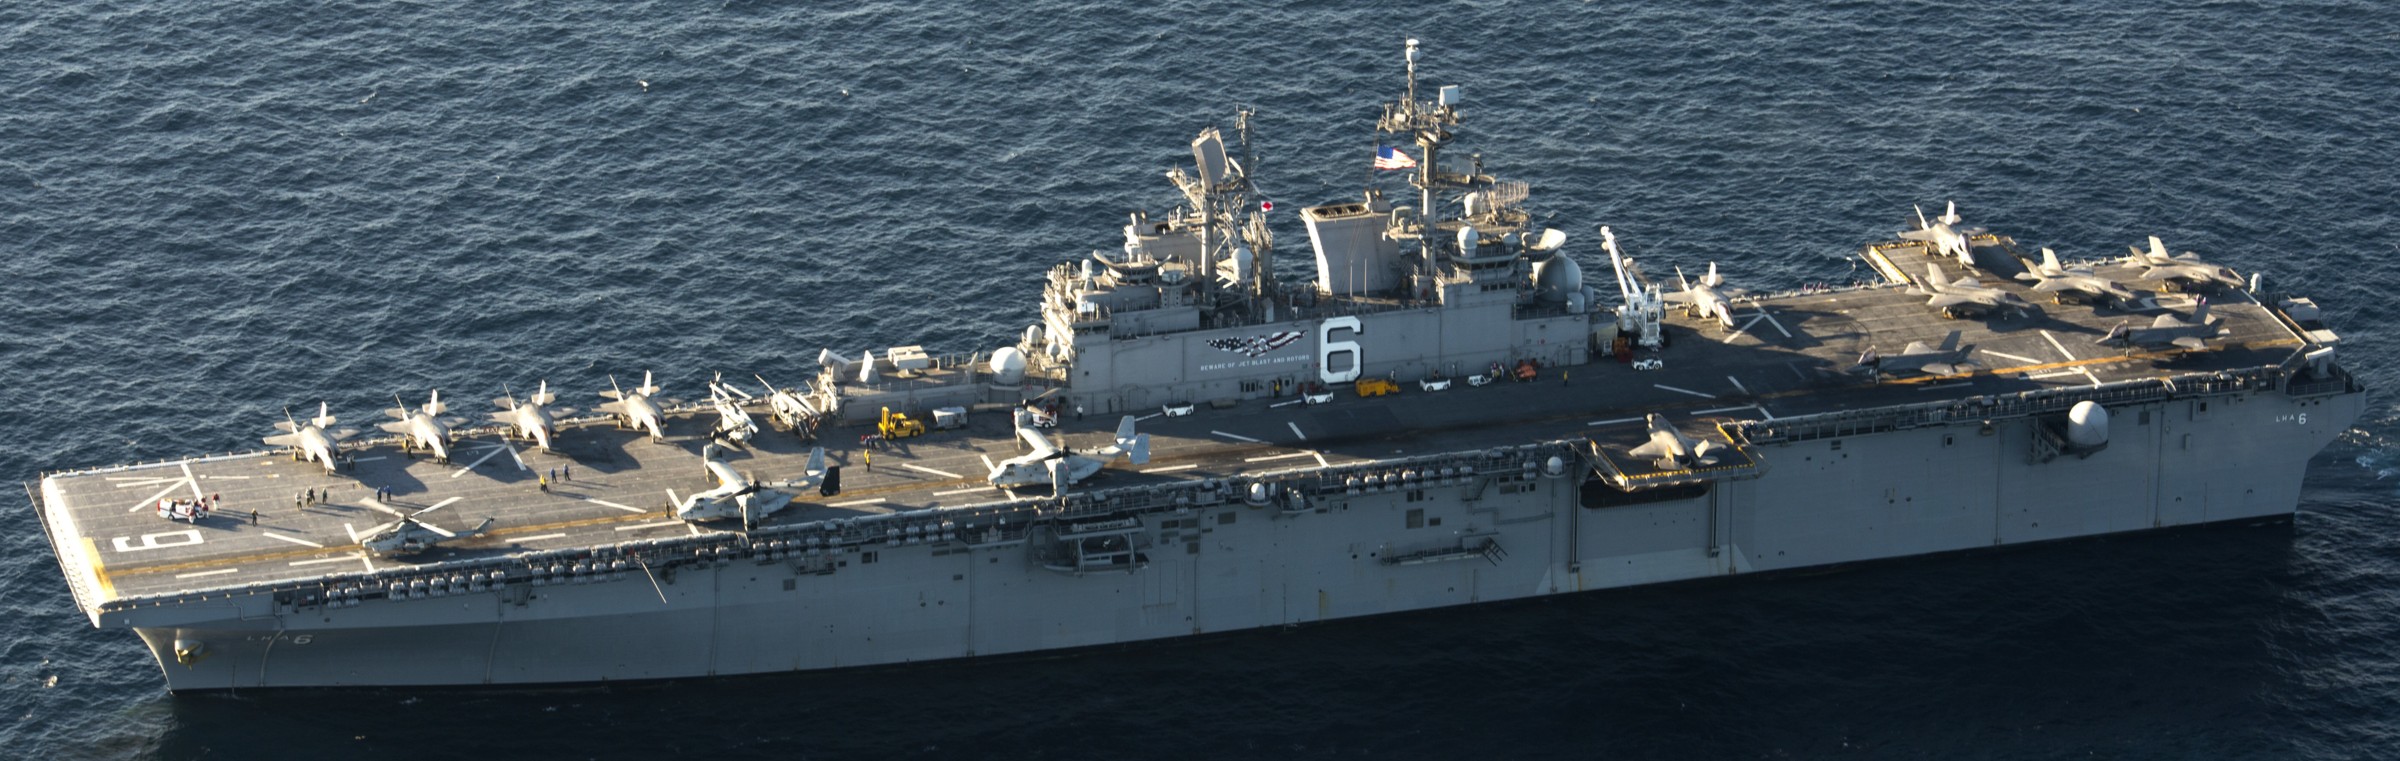 lha-6 uss america amphibious assault ship landing us navy 57